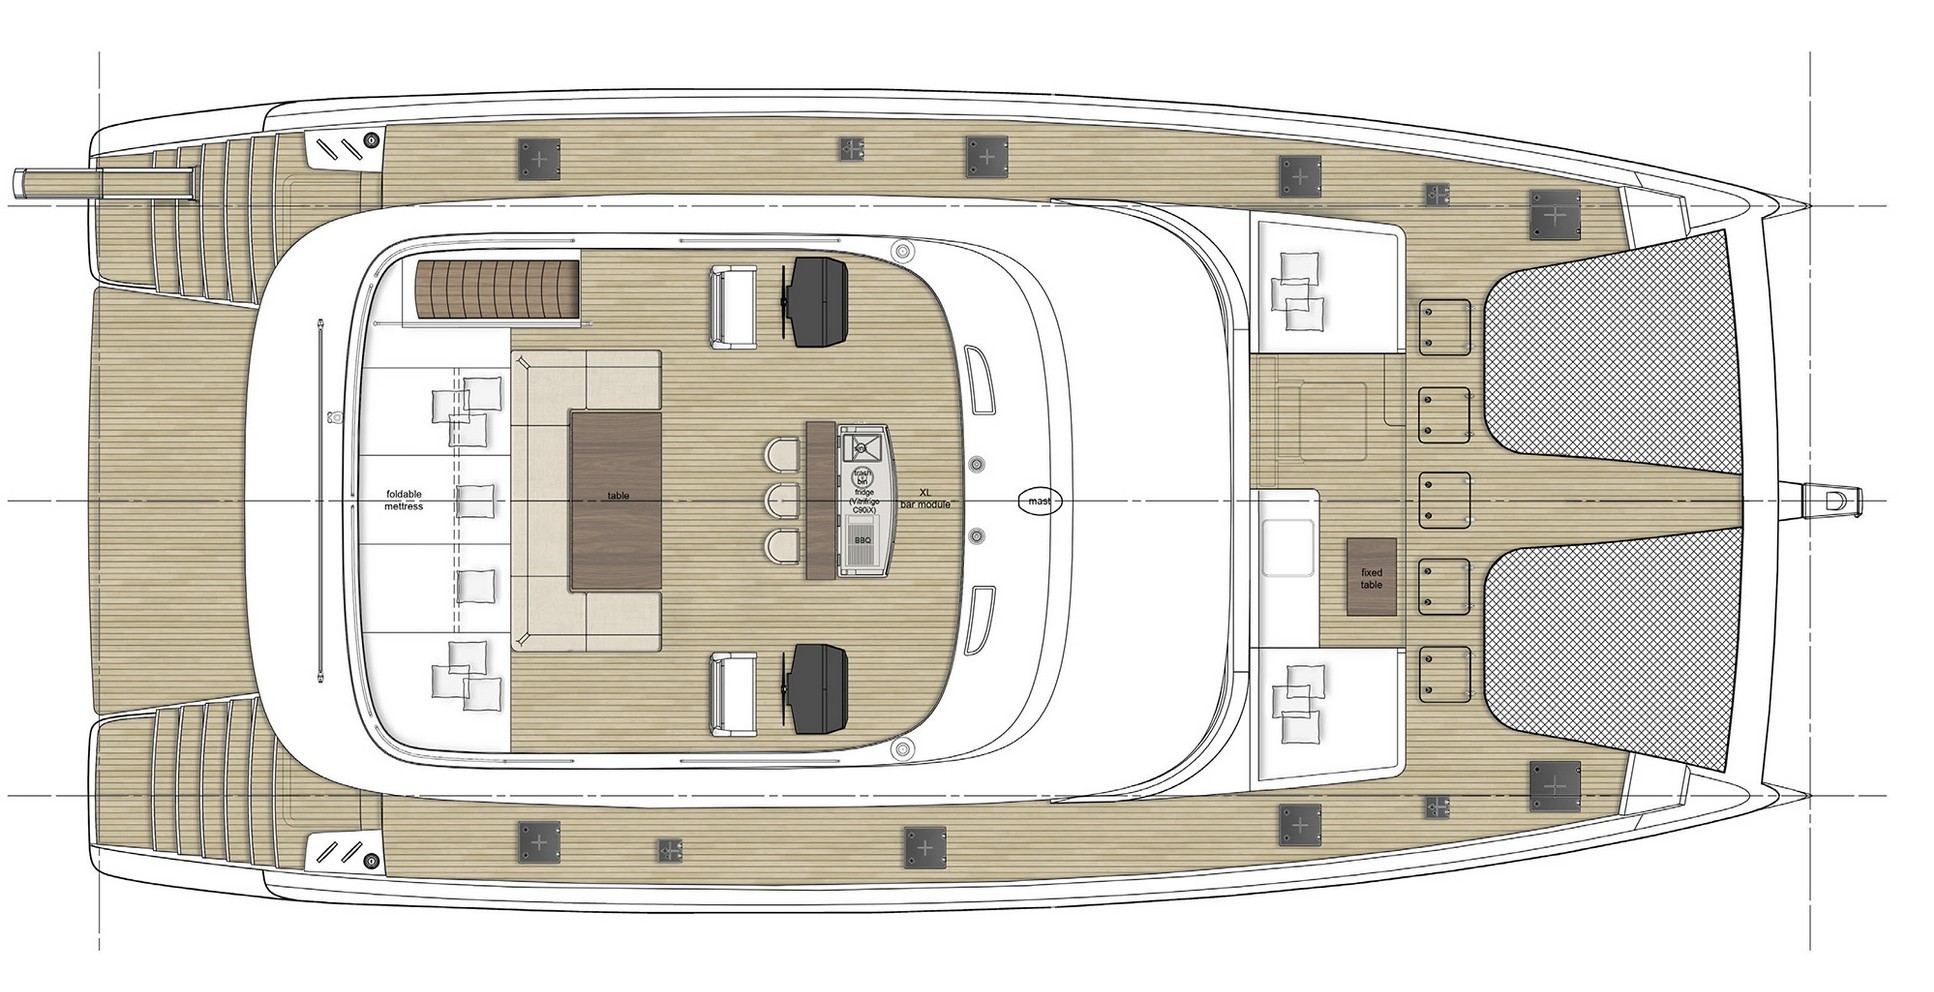 Used Sail Catamaran for Sale 2019 Sunreef 80 Additional Information